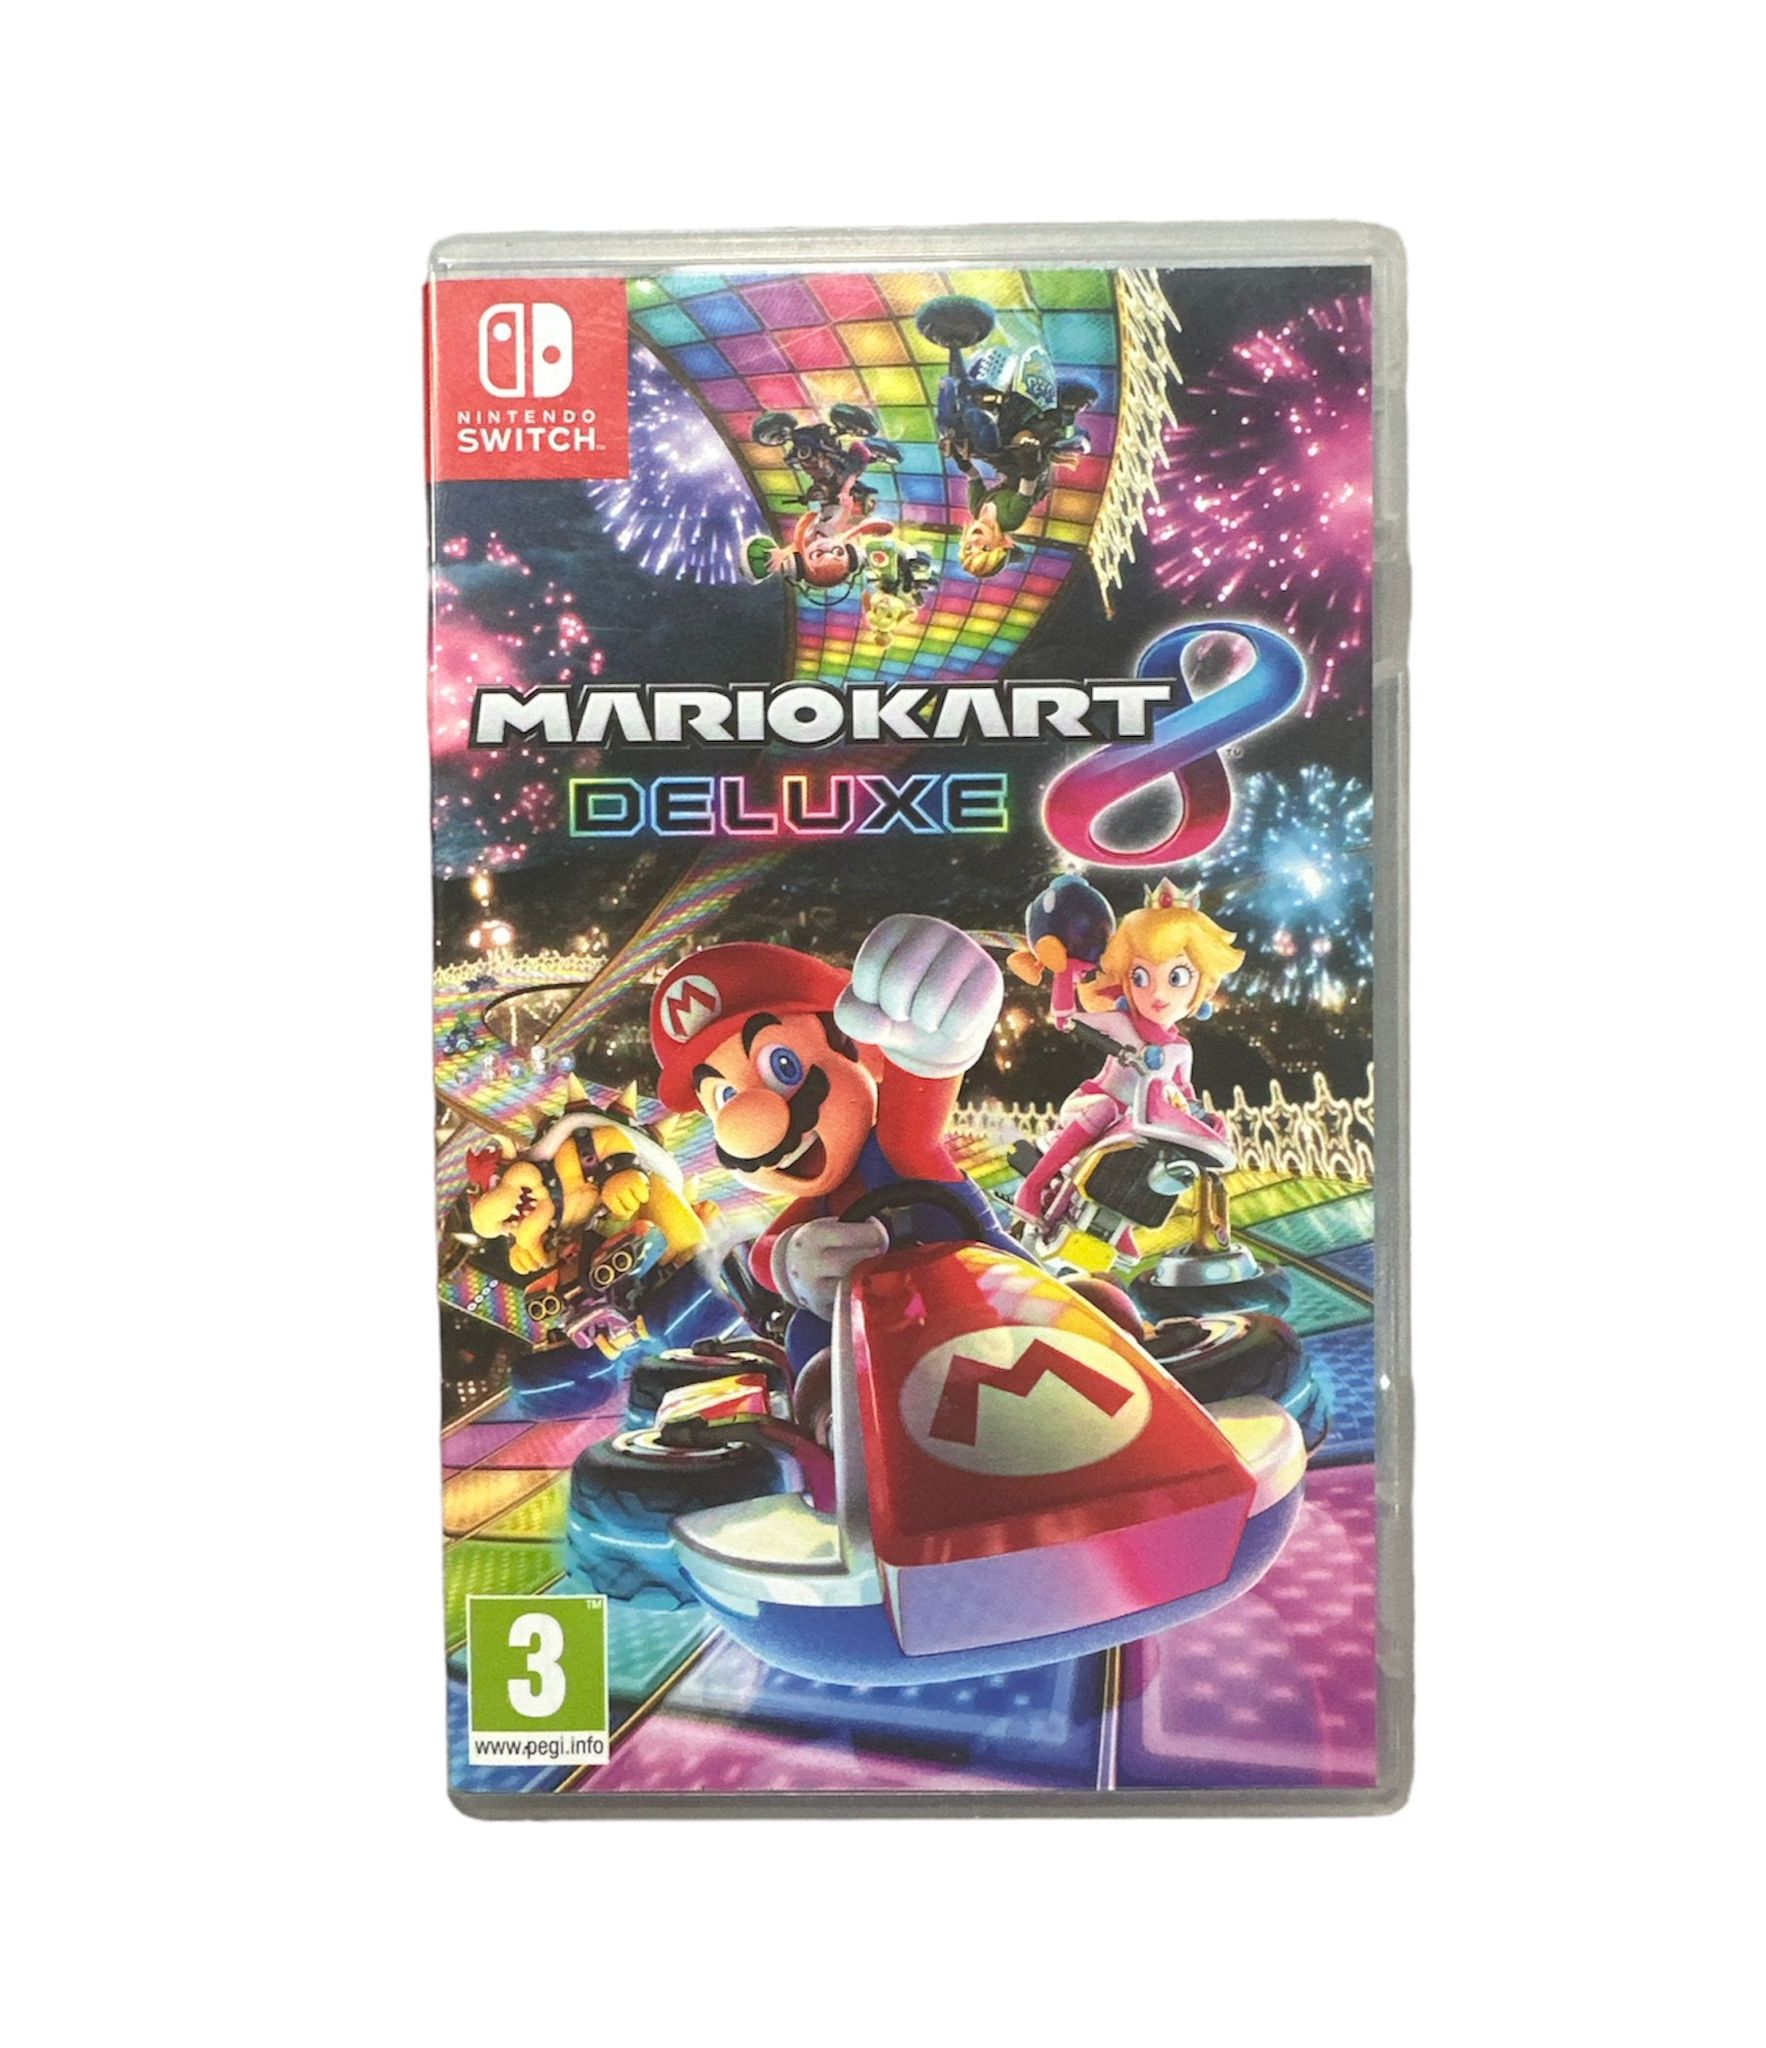 MarioKart 8 Deluxe Nintendo switch edition 